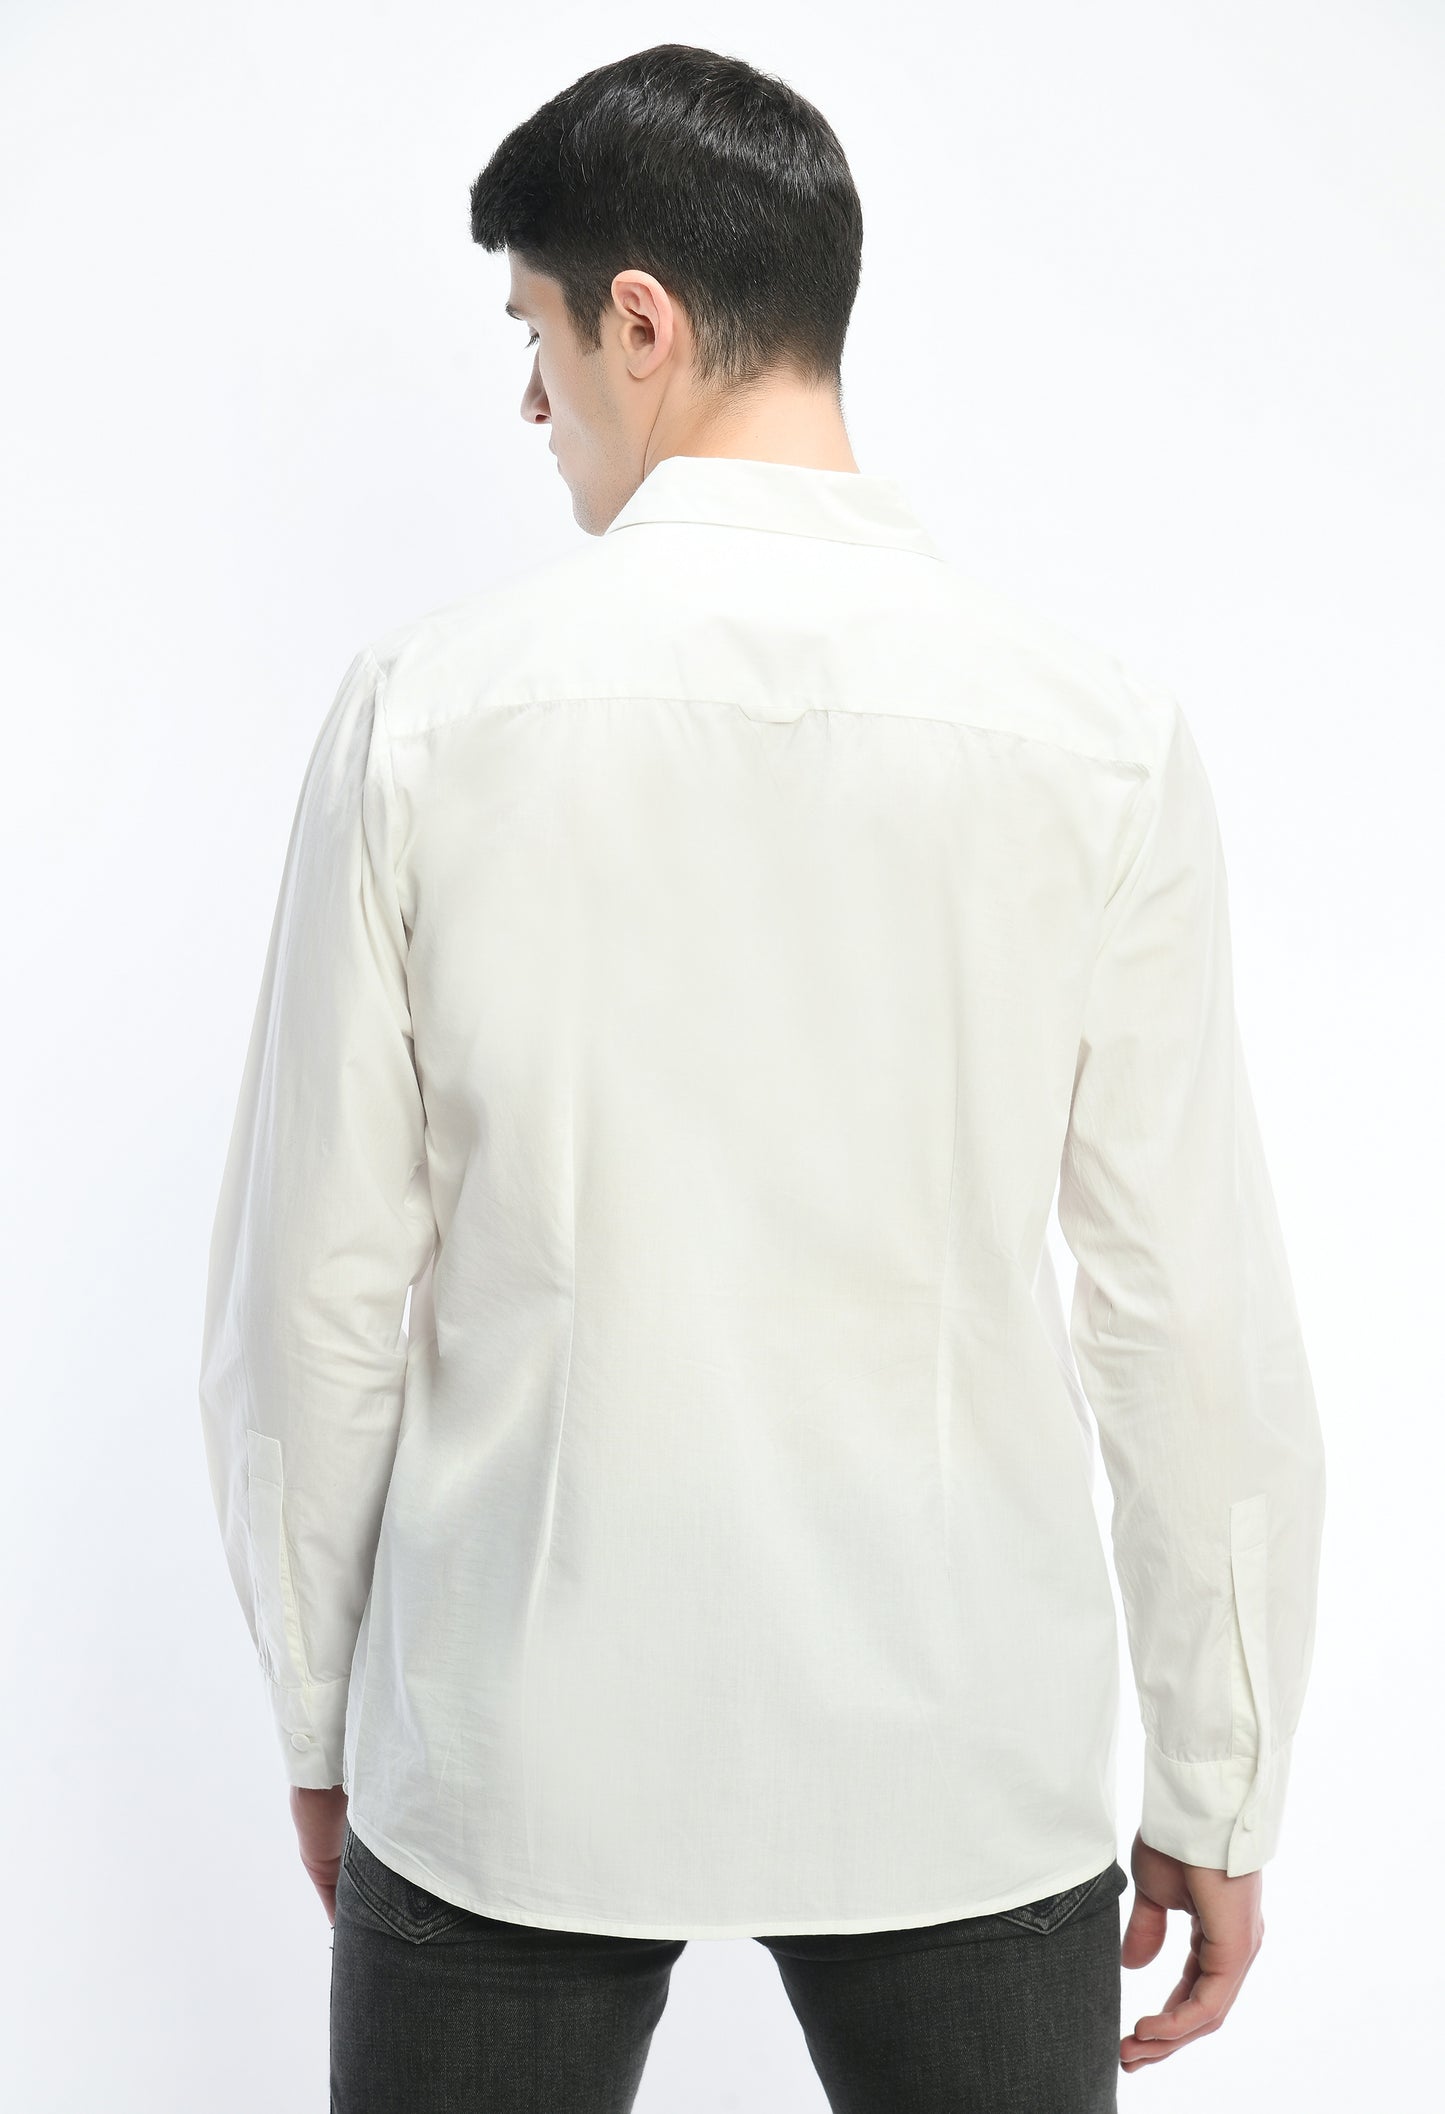 A white cotton shirt showcasing tone on tone appliqué work.